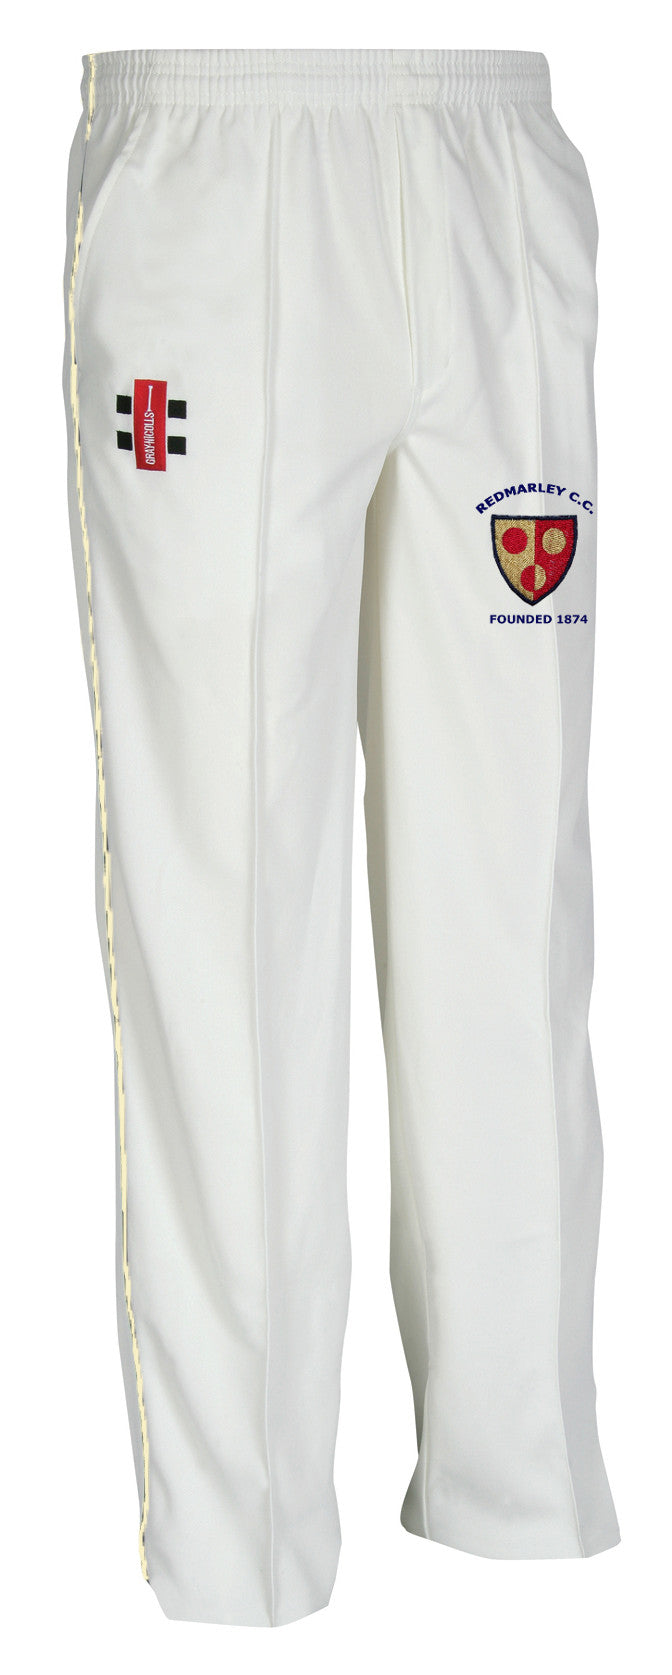 Redmarley CC Junior Matrix Cricket Trouser